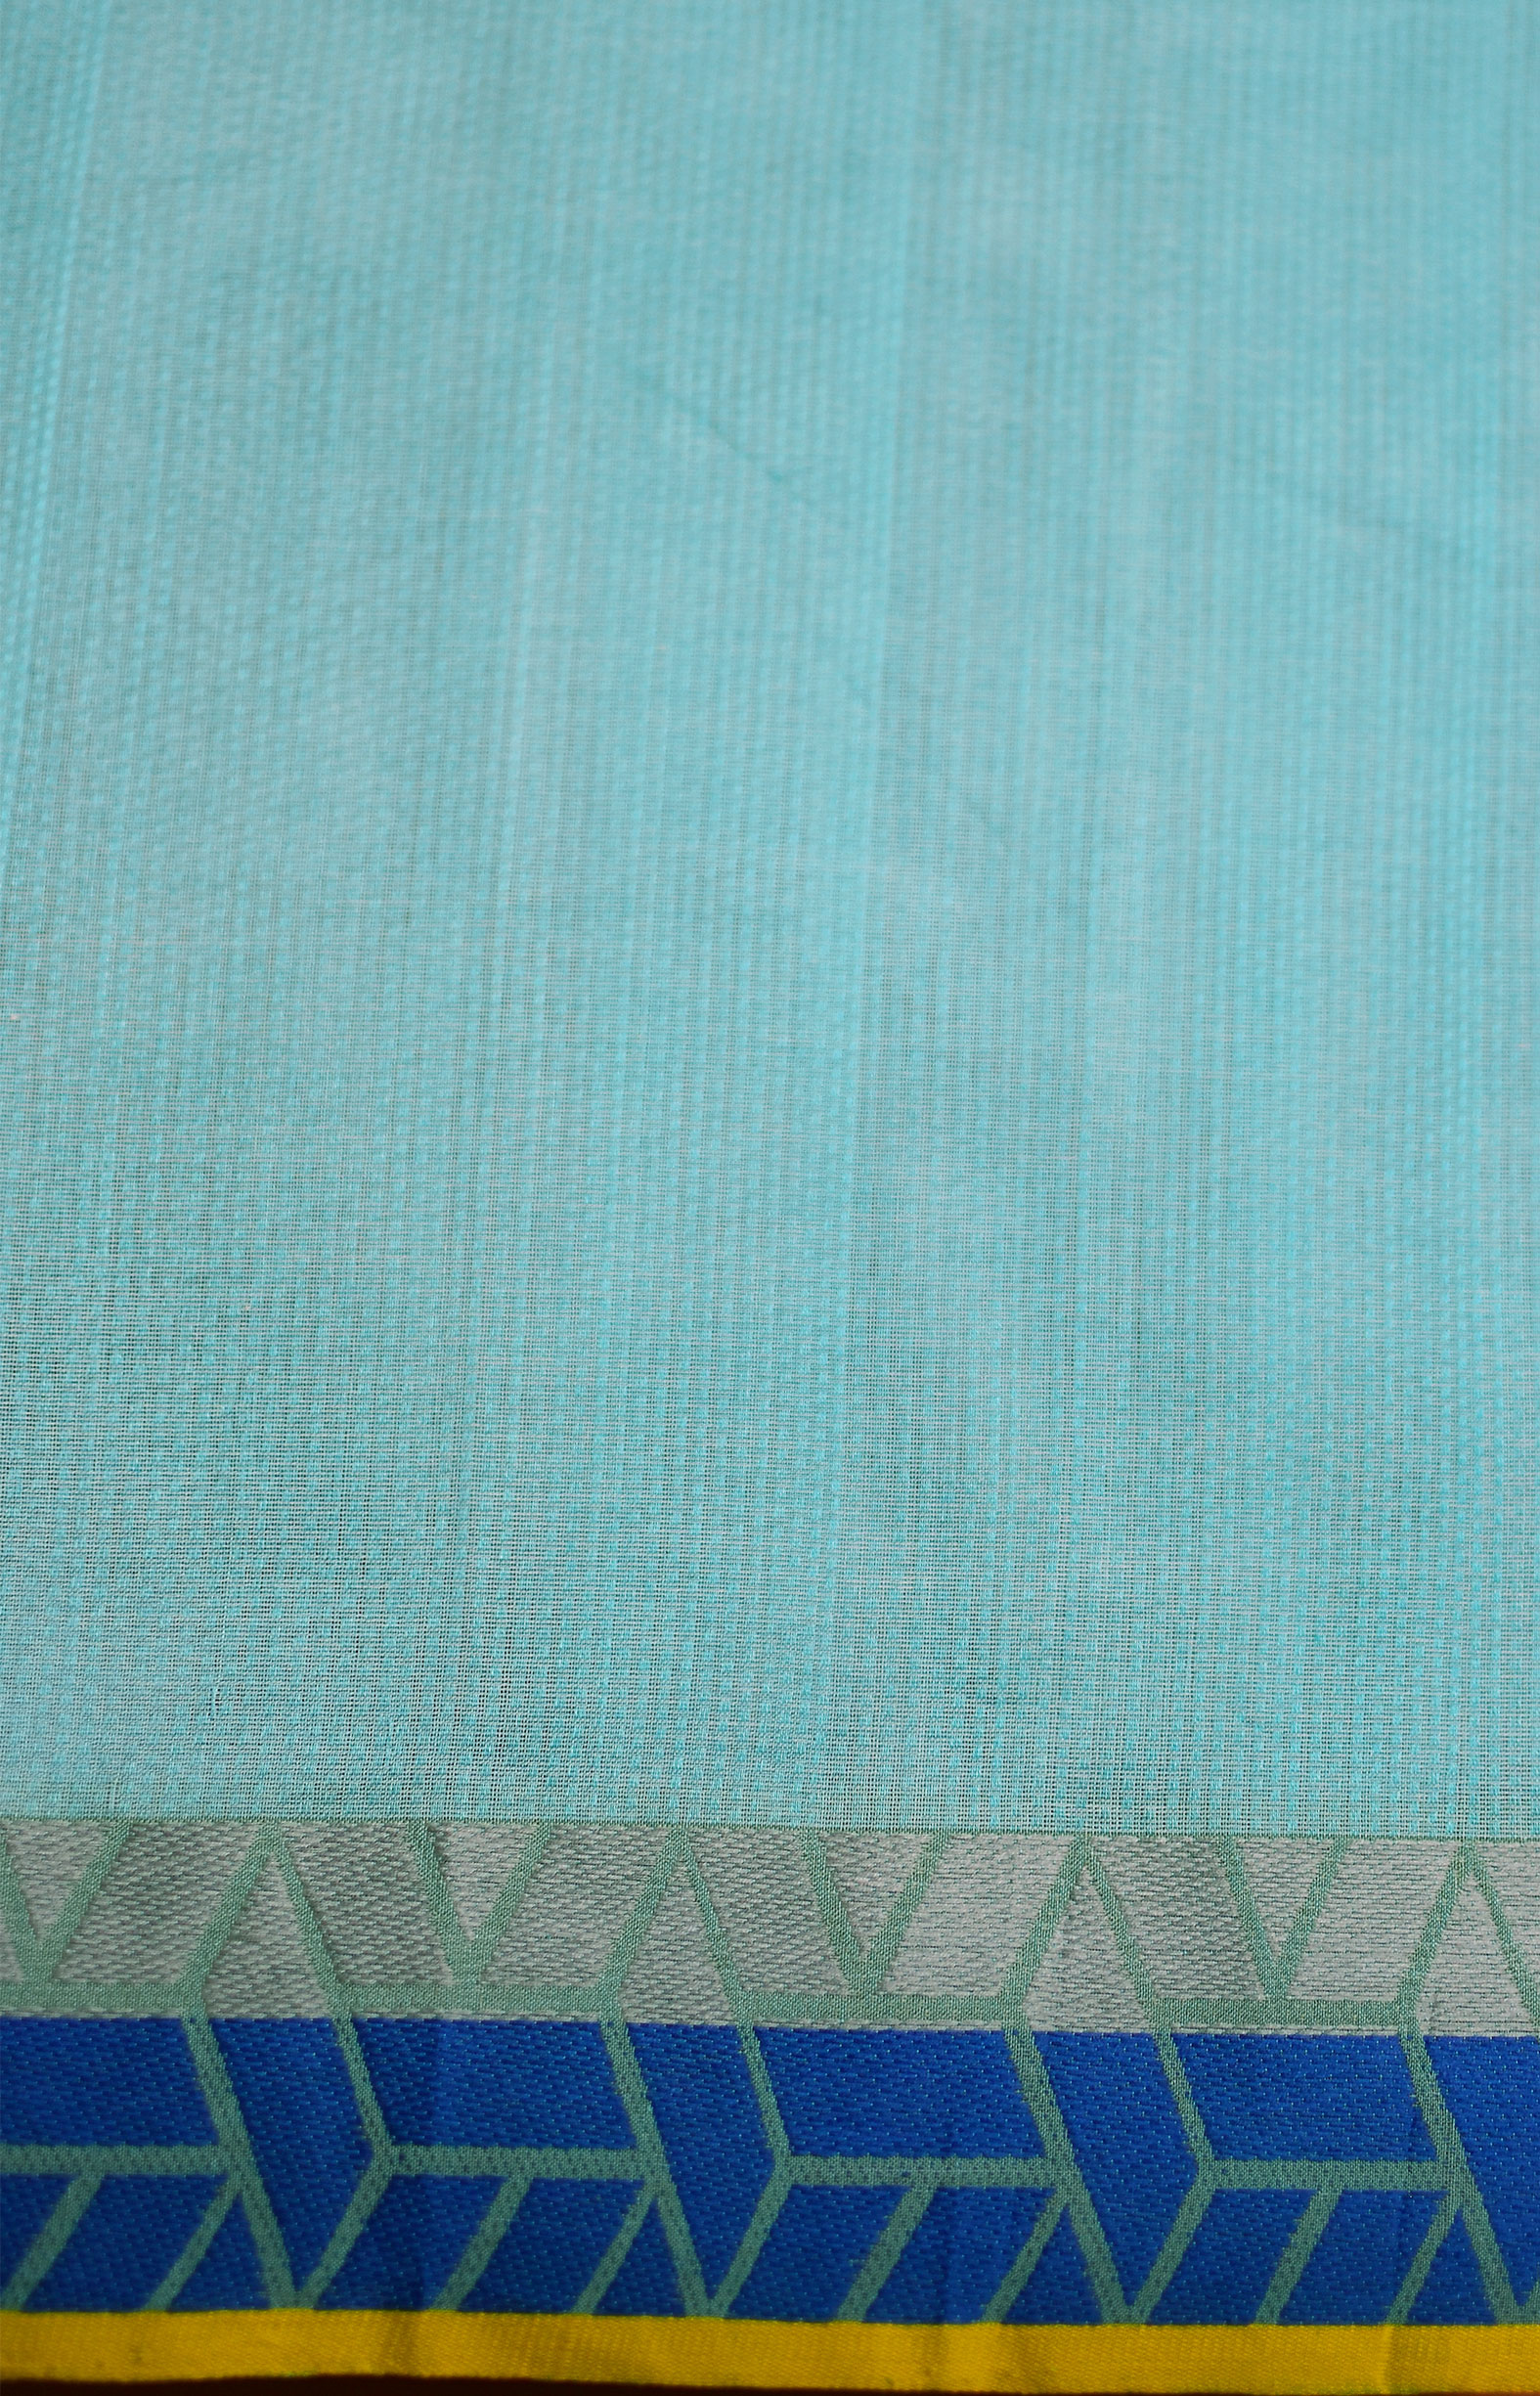 Green, Handwoven Organic Cotton, Textured Weave , Jacquard, Work Wear , Striped Saree